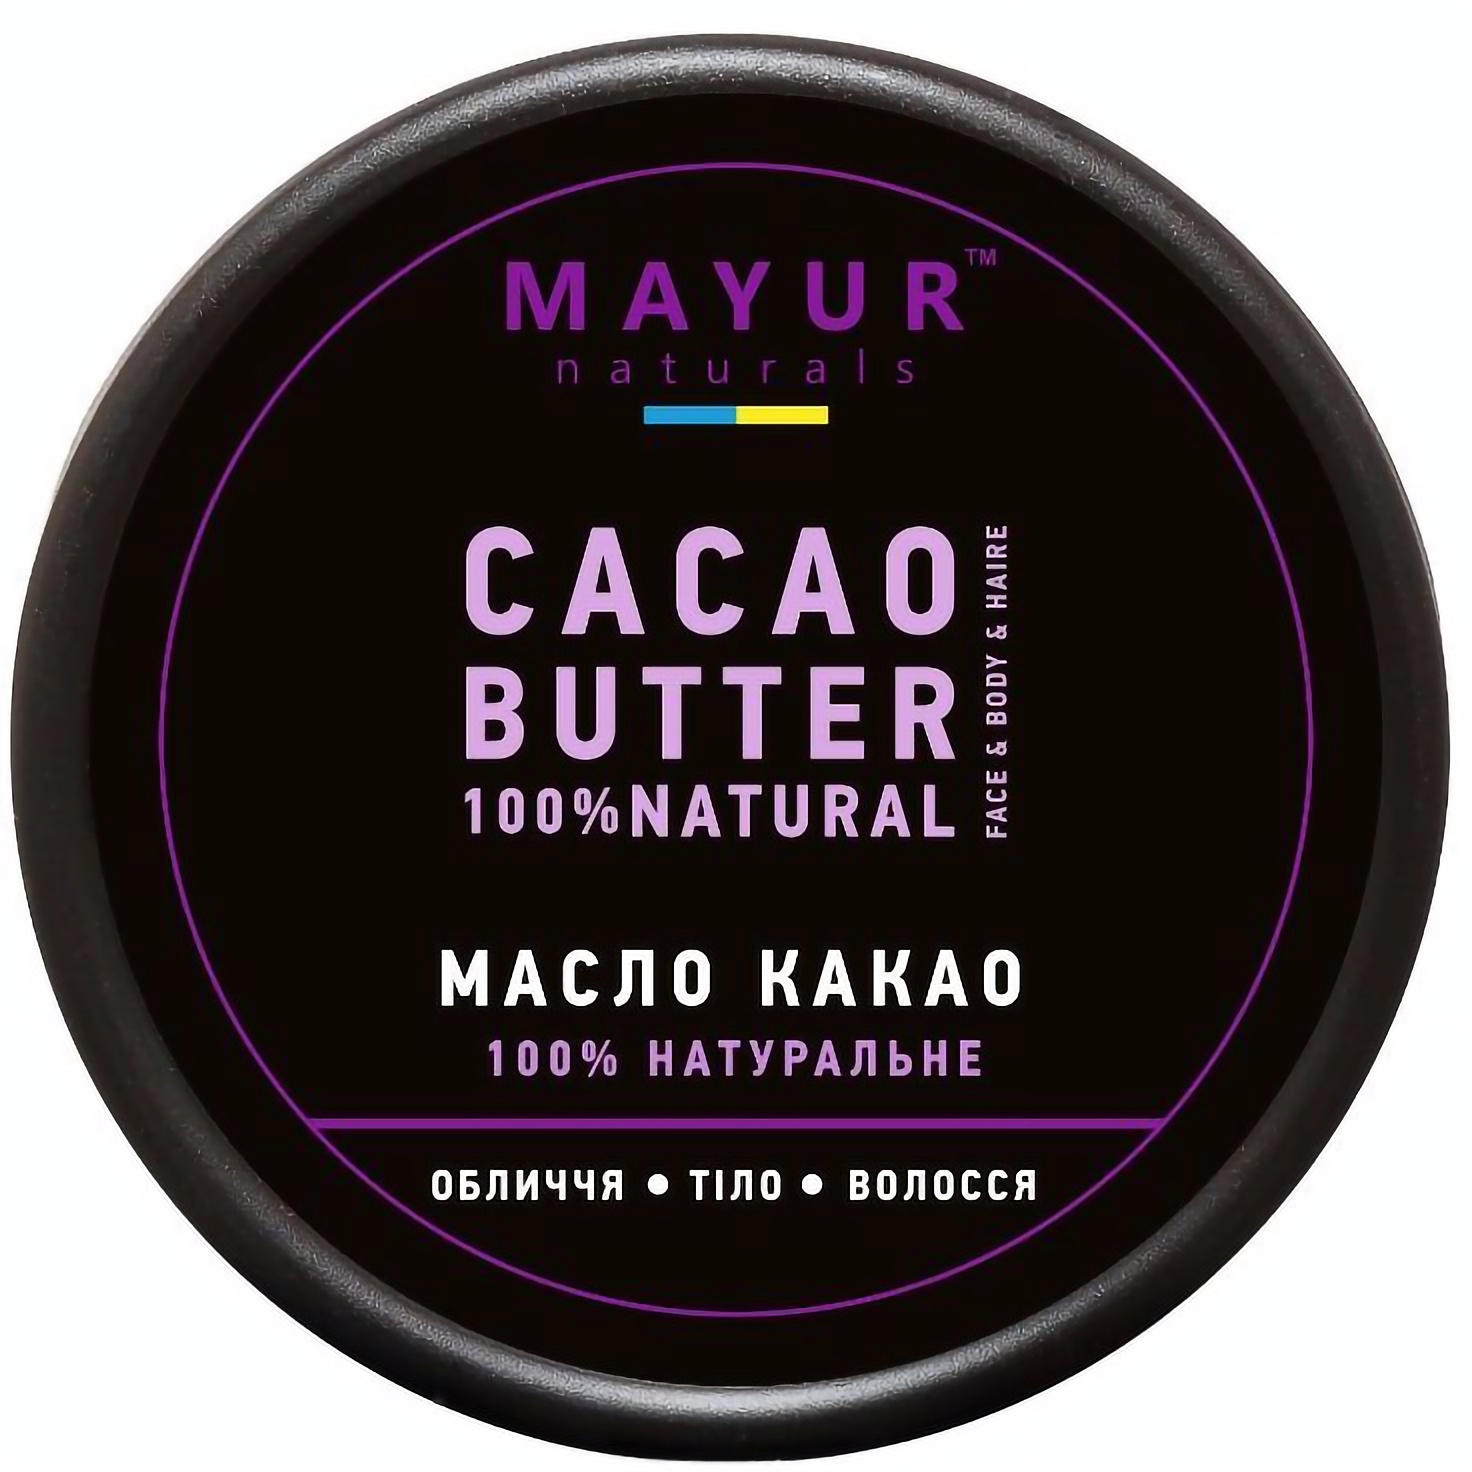 Масло какао Mayur, 50 г - фото 1